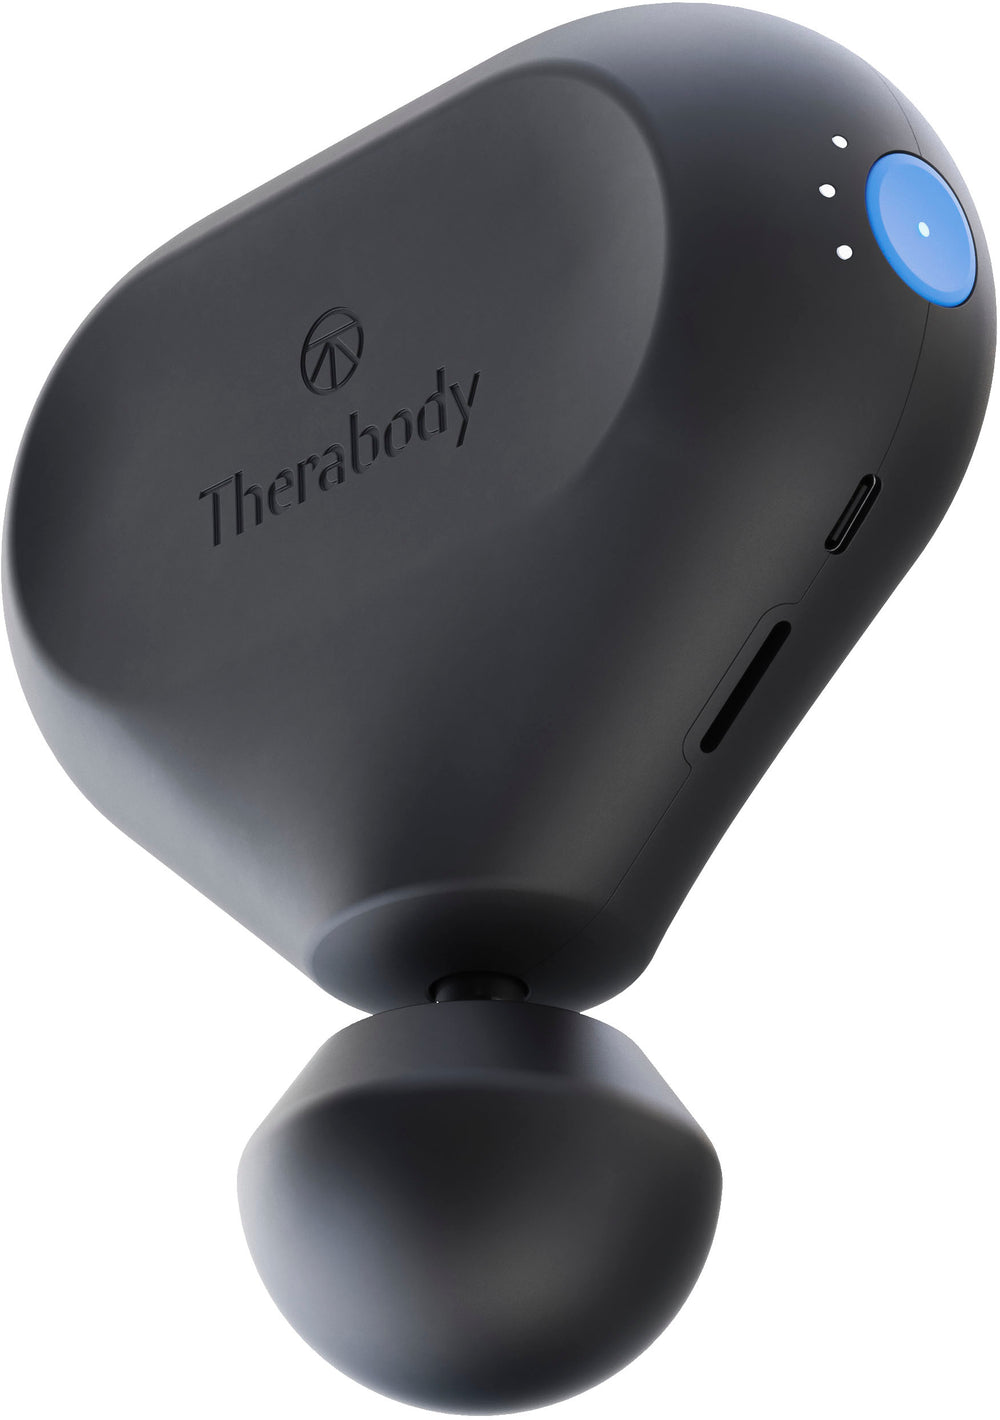 Therabody - Theragun mini (2nd Gen) Bluetooth + App Enabled Portable Massage Gun & 30% Lighter (Latest Model) - Black_1